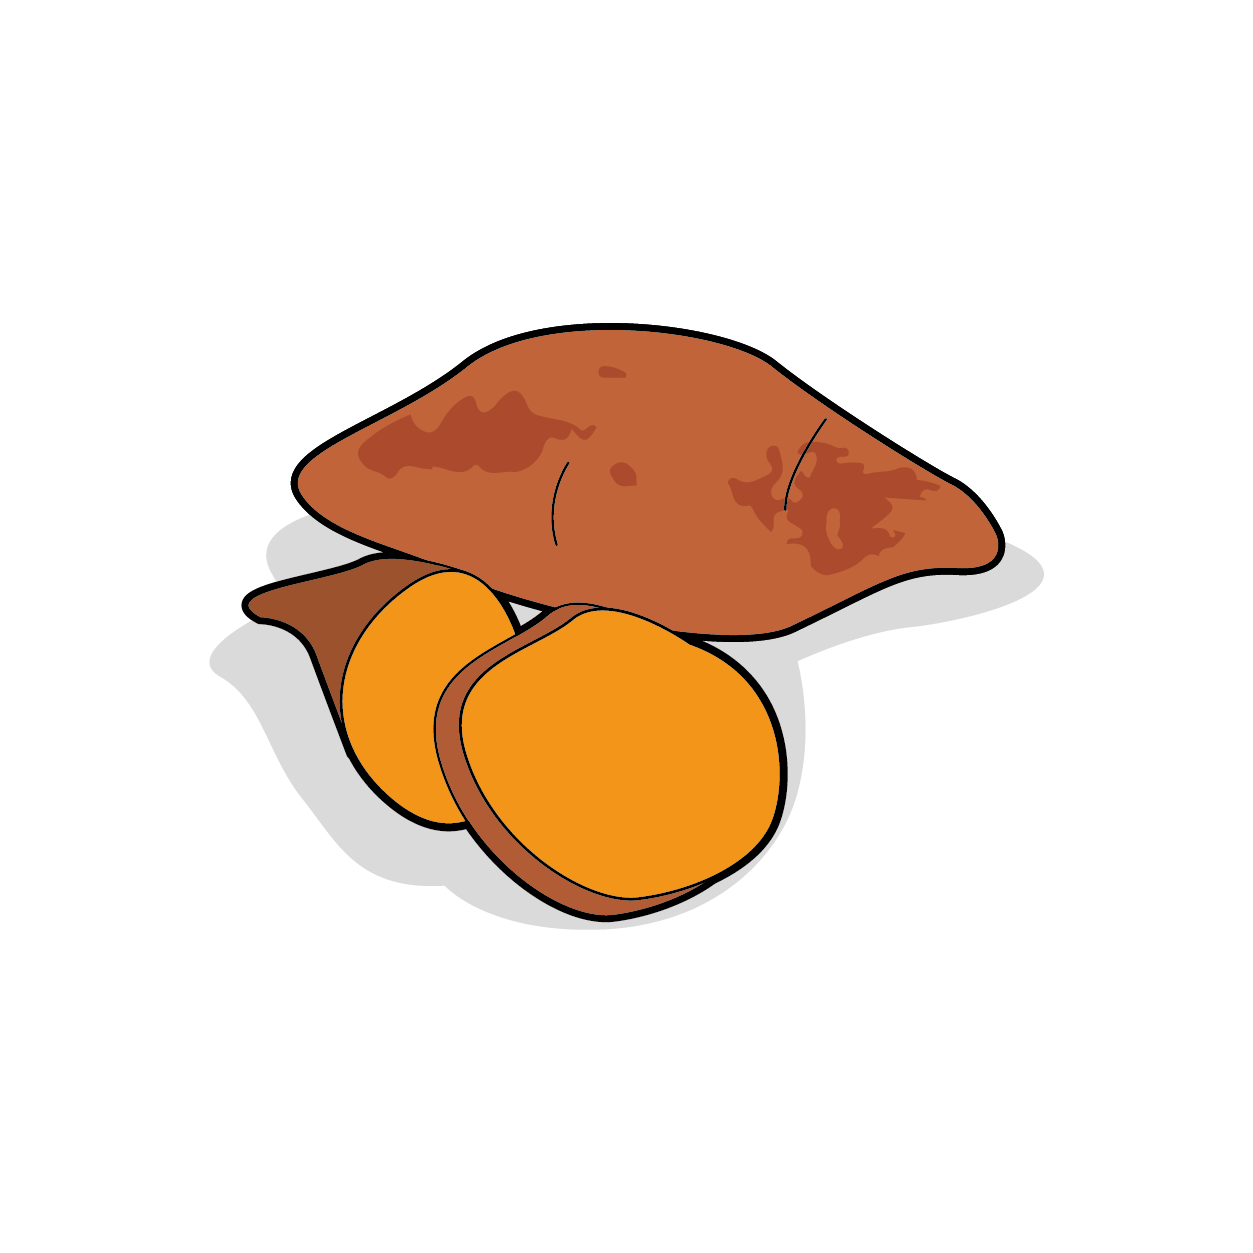 Icone d'une patate douce, ailmacocotte.com